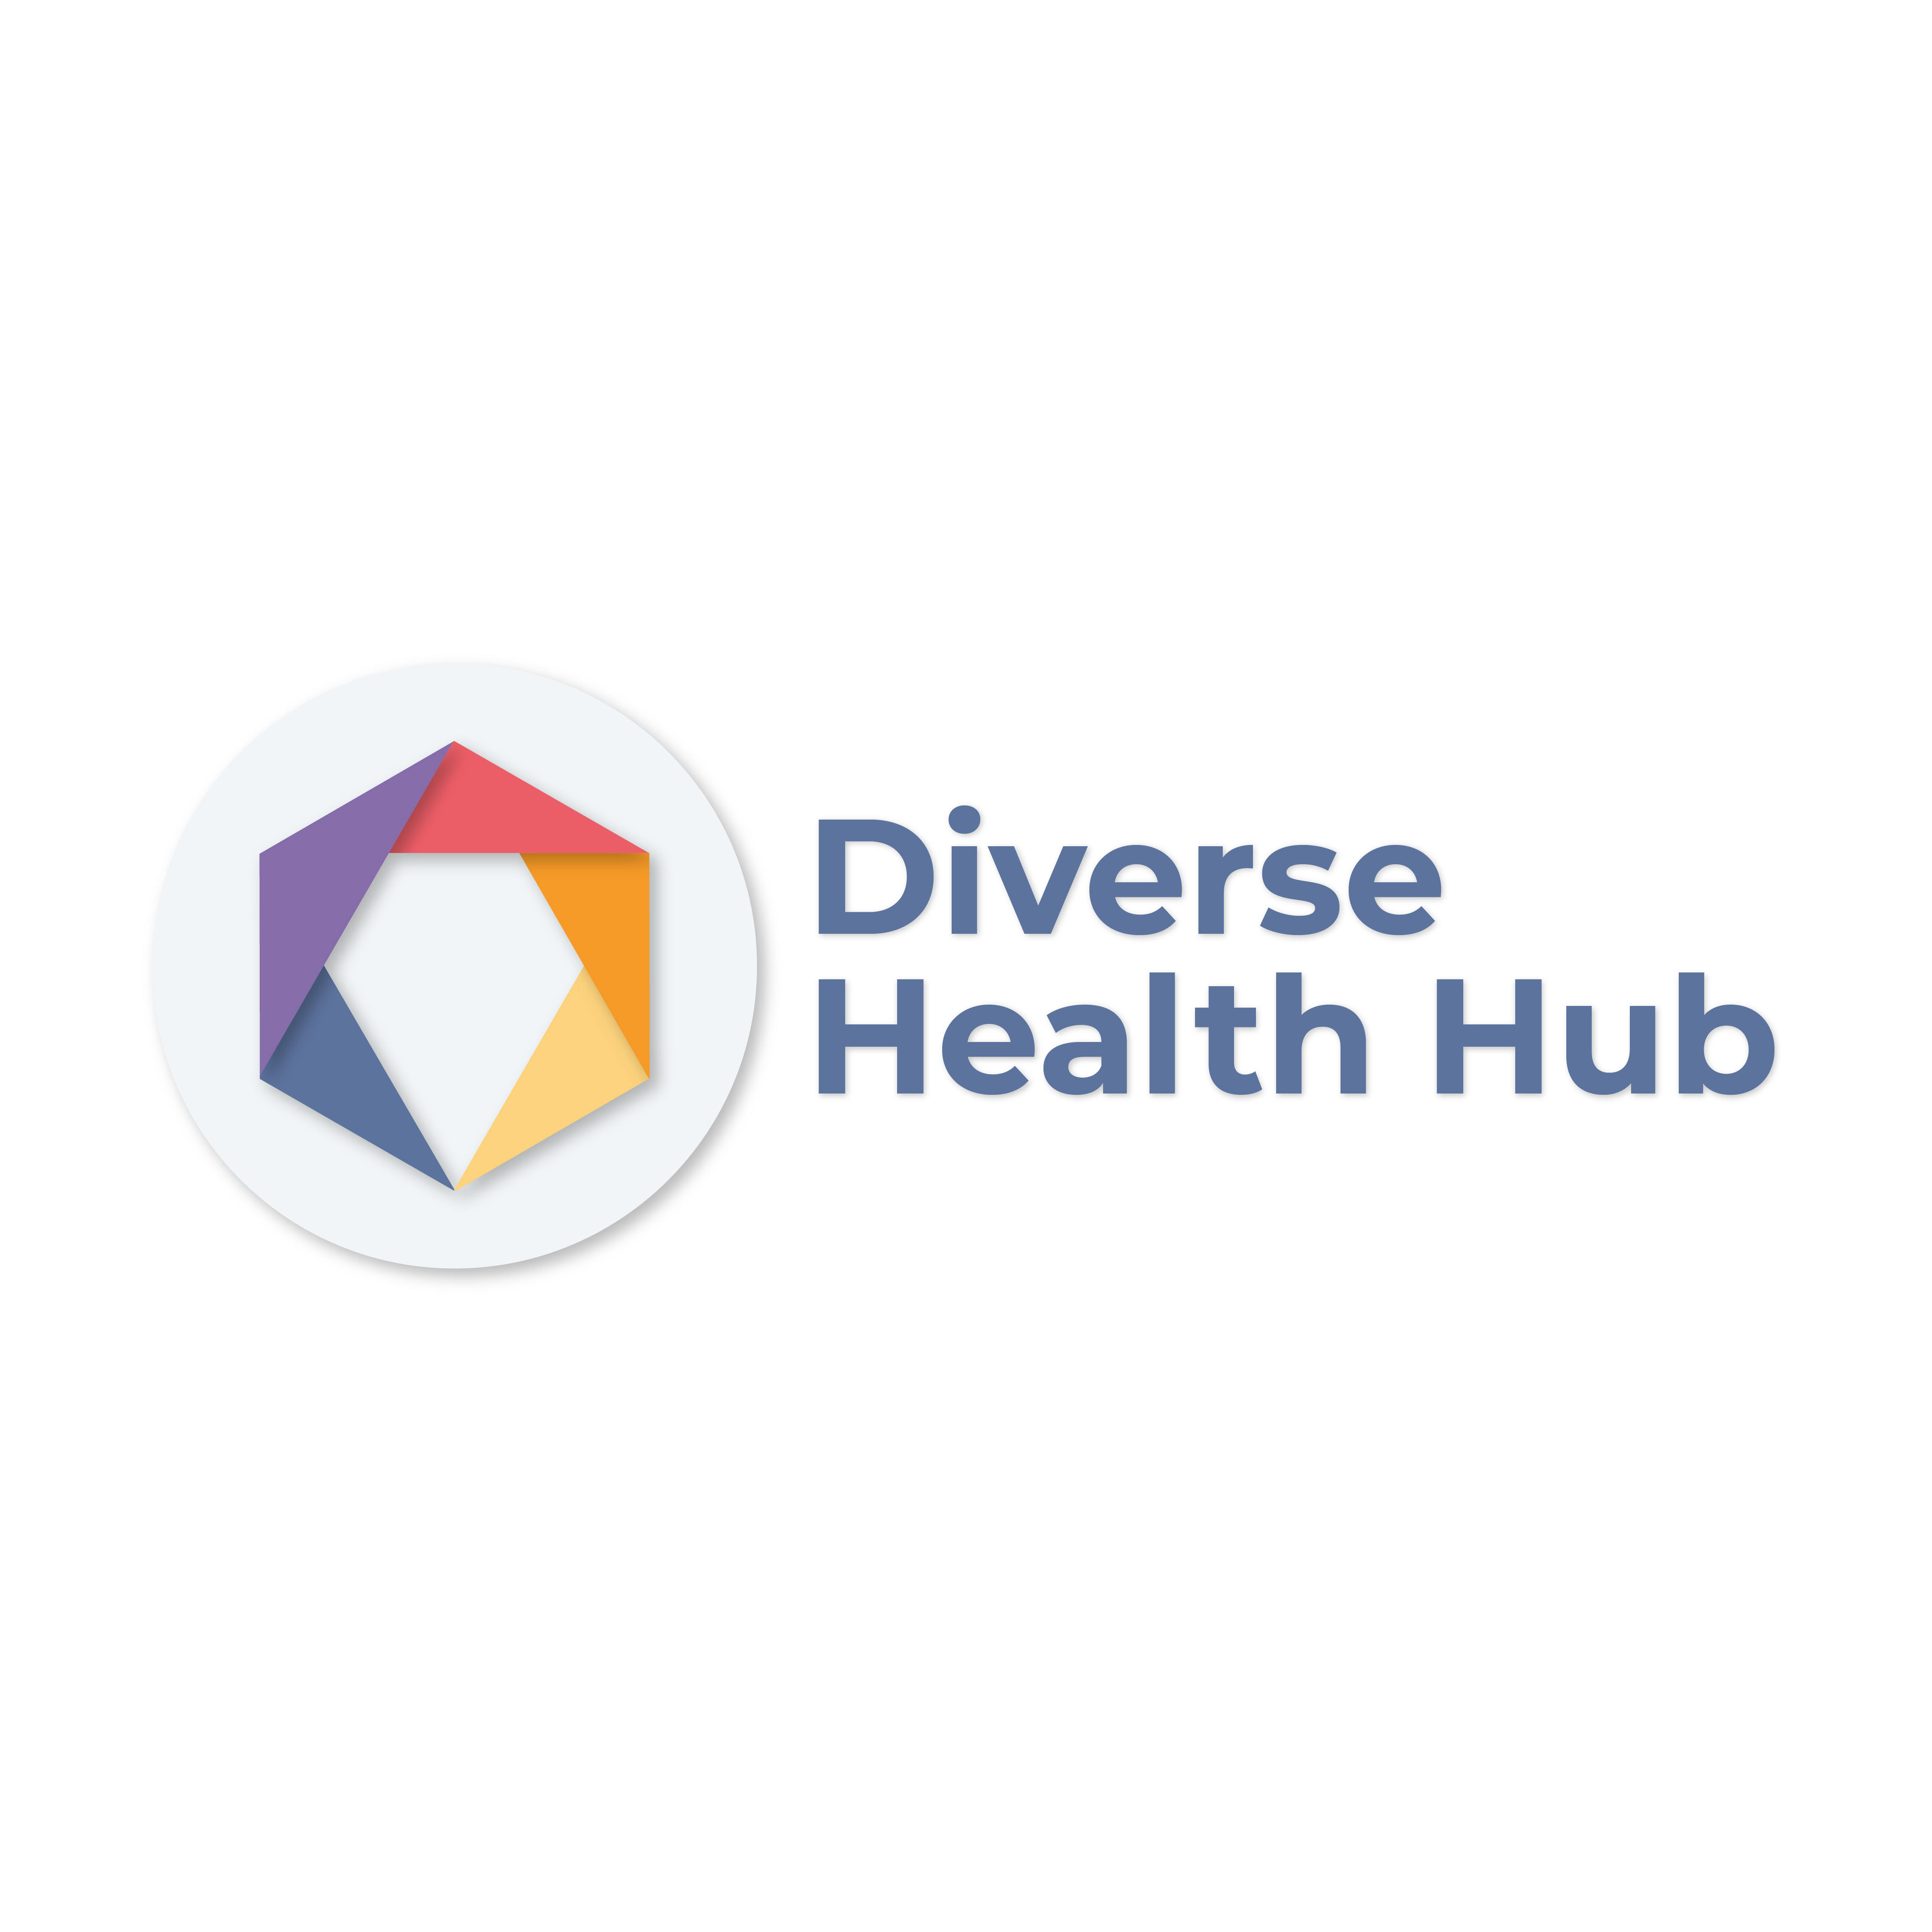 Diverse Health Hub brand logo